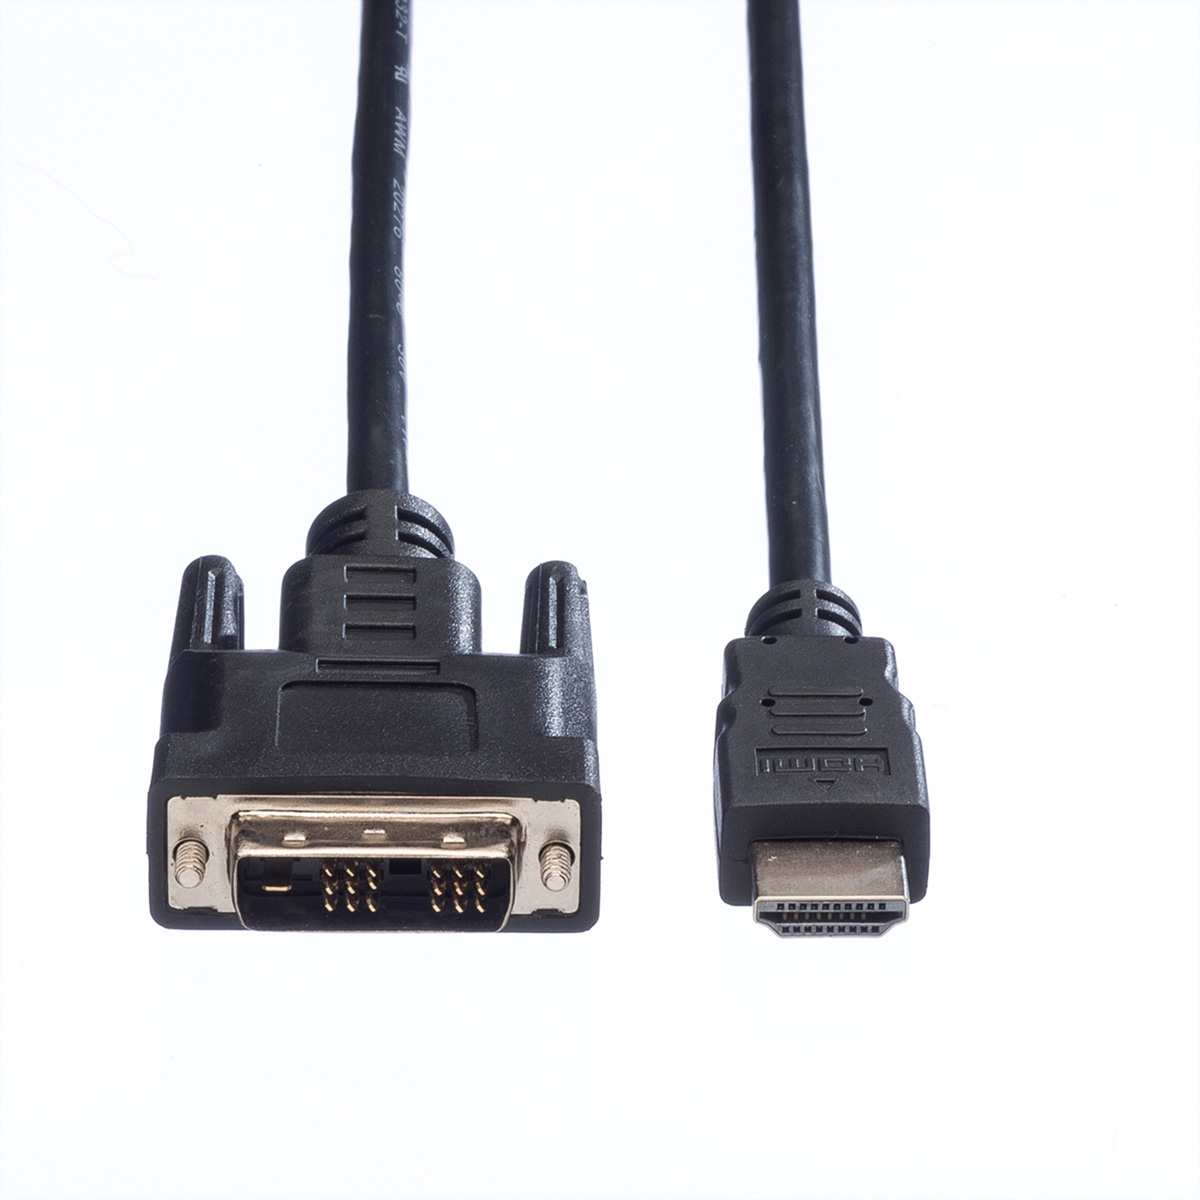 VALUE Kabel DVI (18+1) ST m ST, HDMI-DVI-Kabel, - 3 HDMI